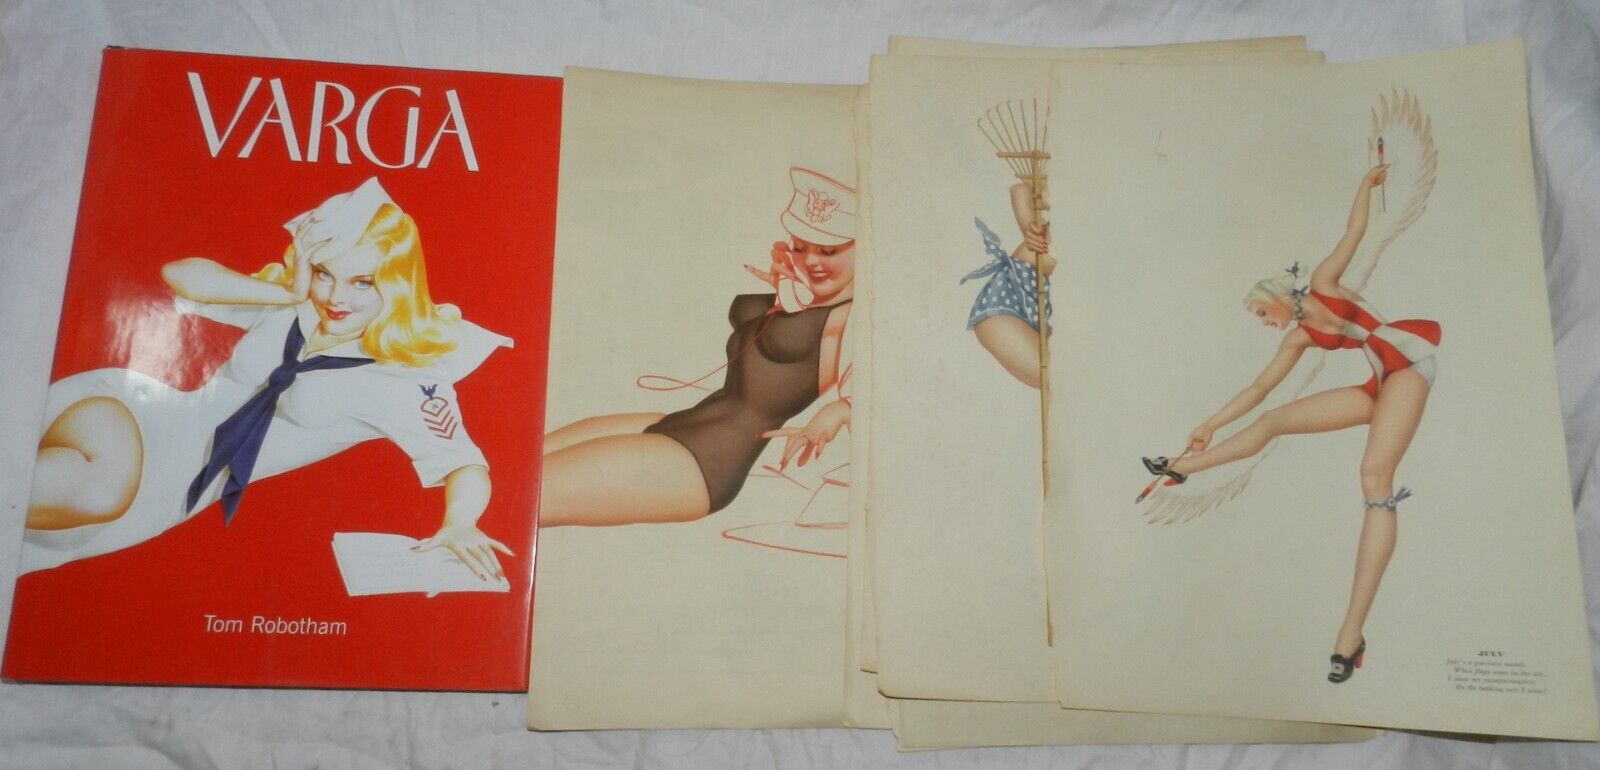 Lot of 16 Vintage 1941 Varga Girl Pin-Up Images + Varga Book by Tom Robotham